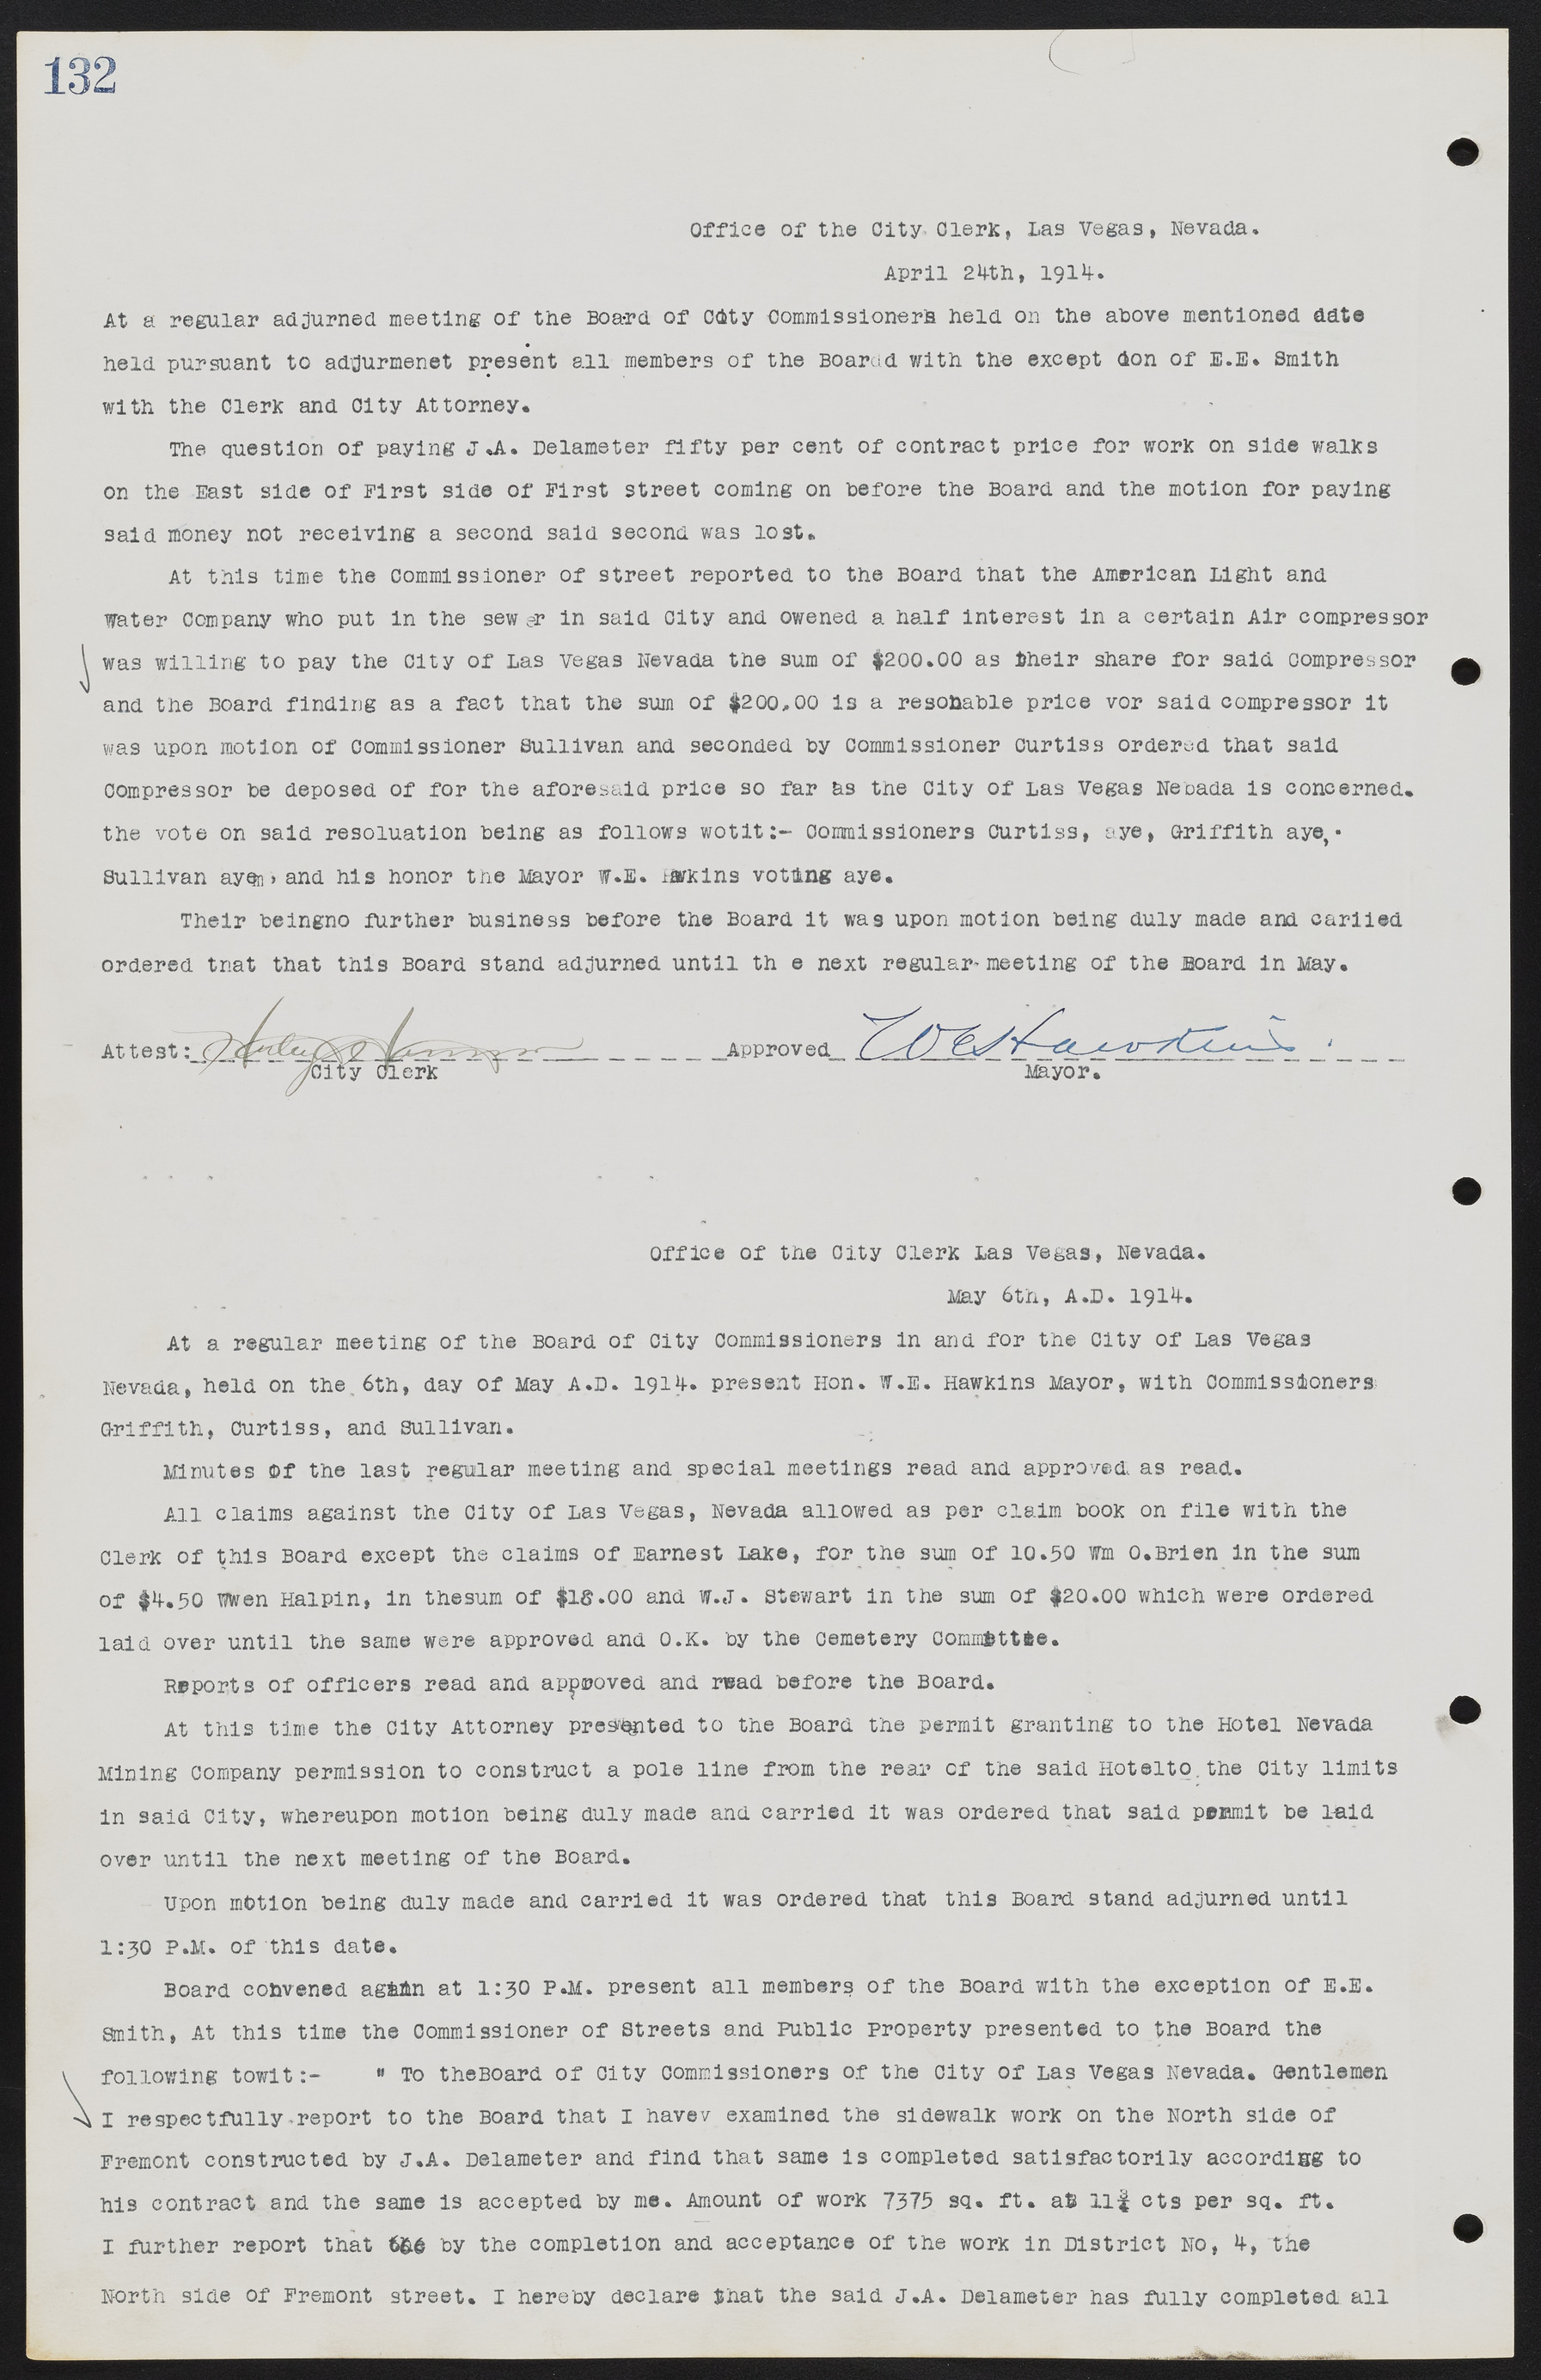 Las Vegas City Commission Minutes, June 22, 1911 to February 7, 1922, lvc000001-146